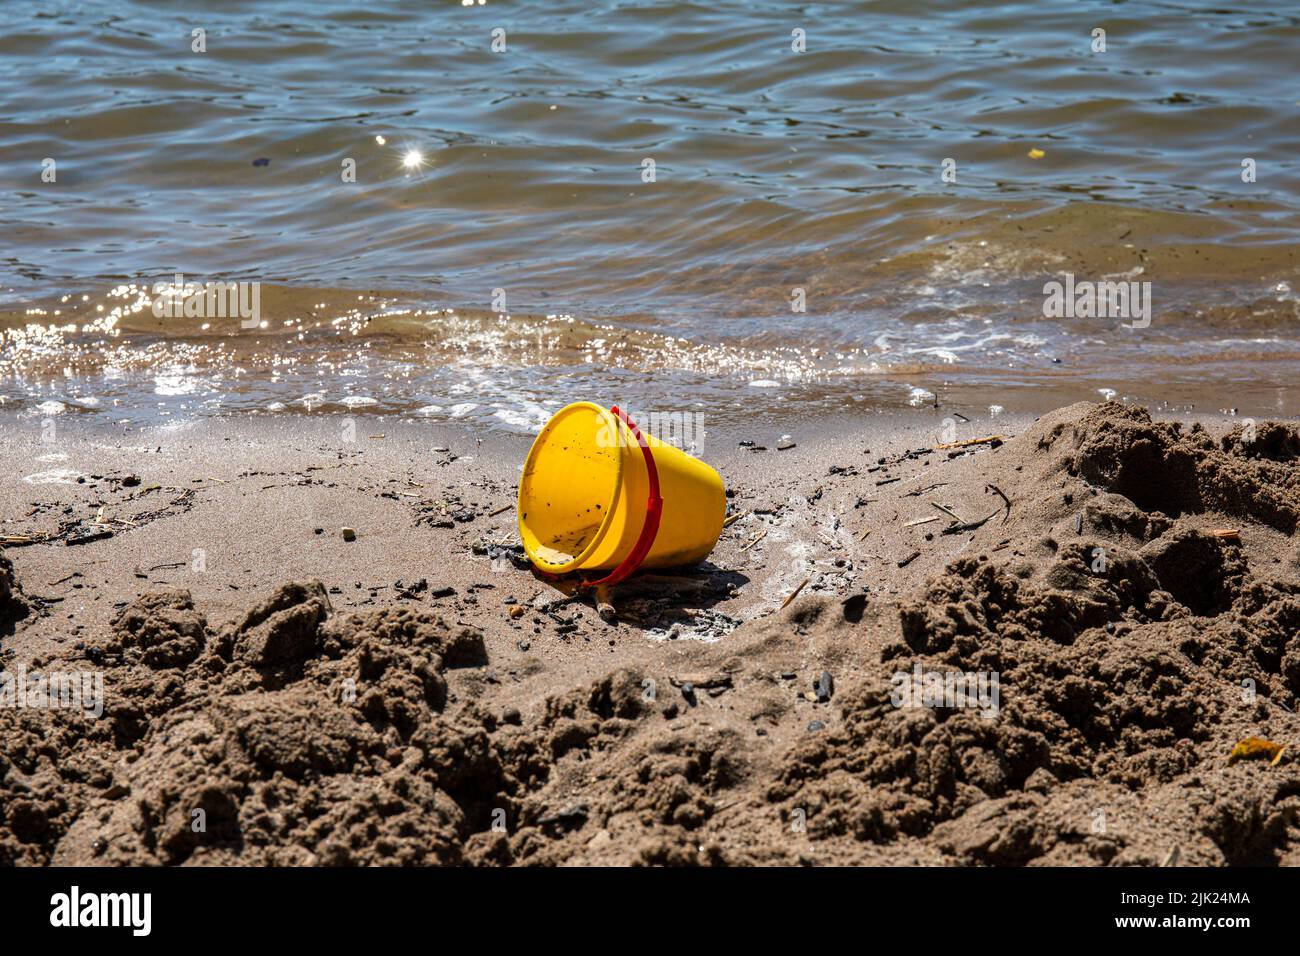 Abandoned plastic beach bucket sand toy on beach Stock Photo